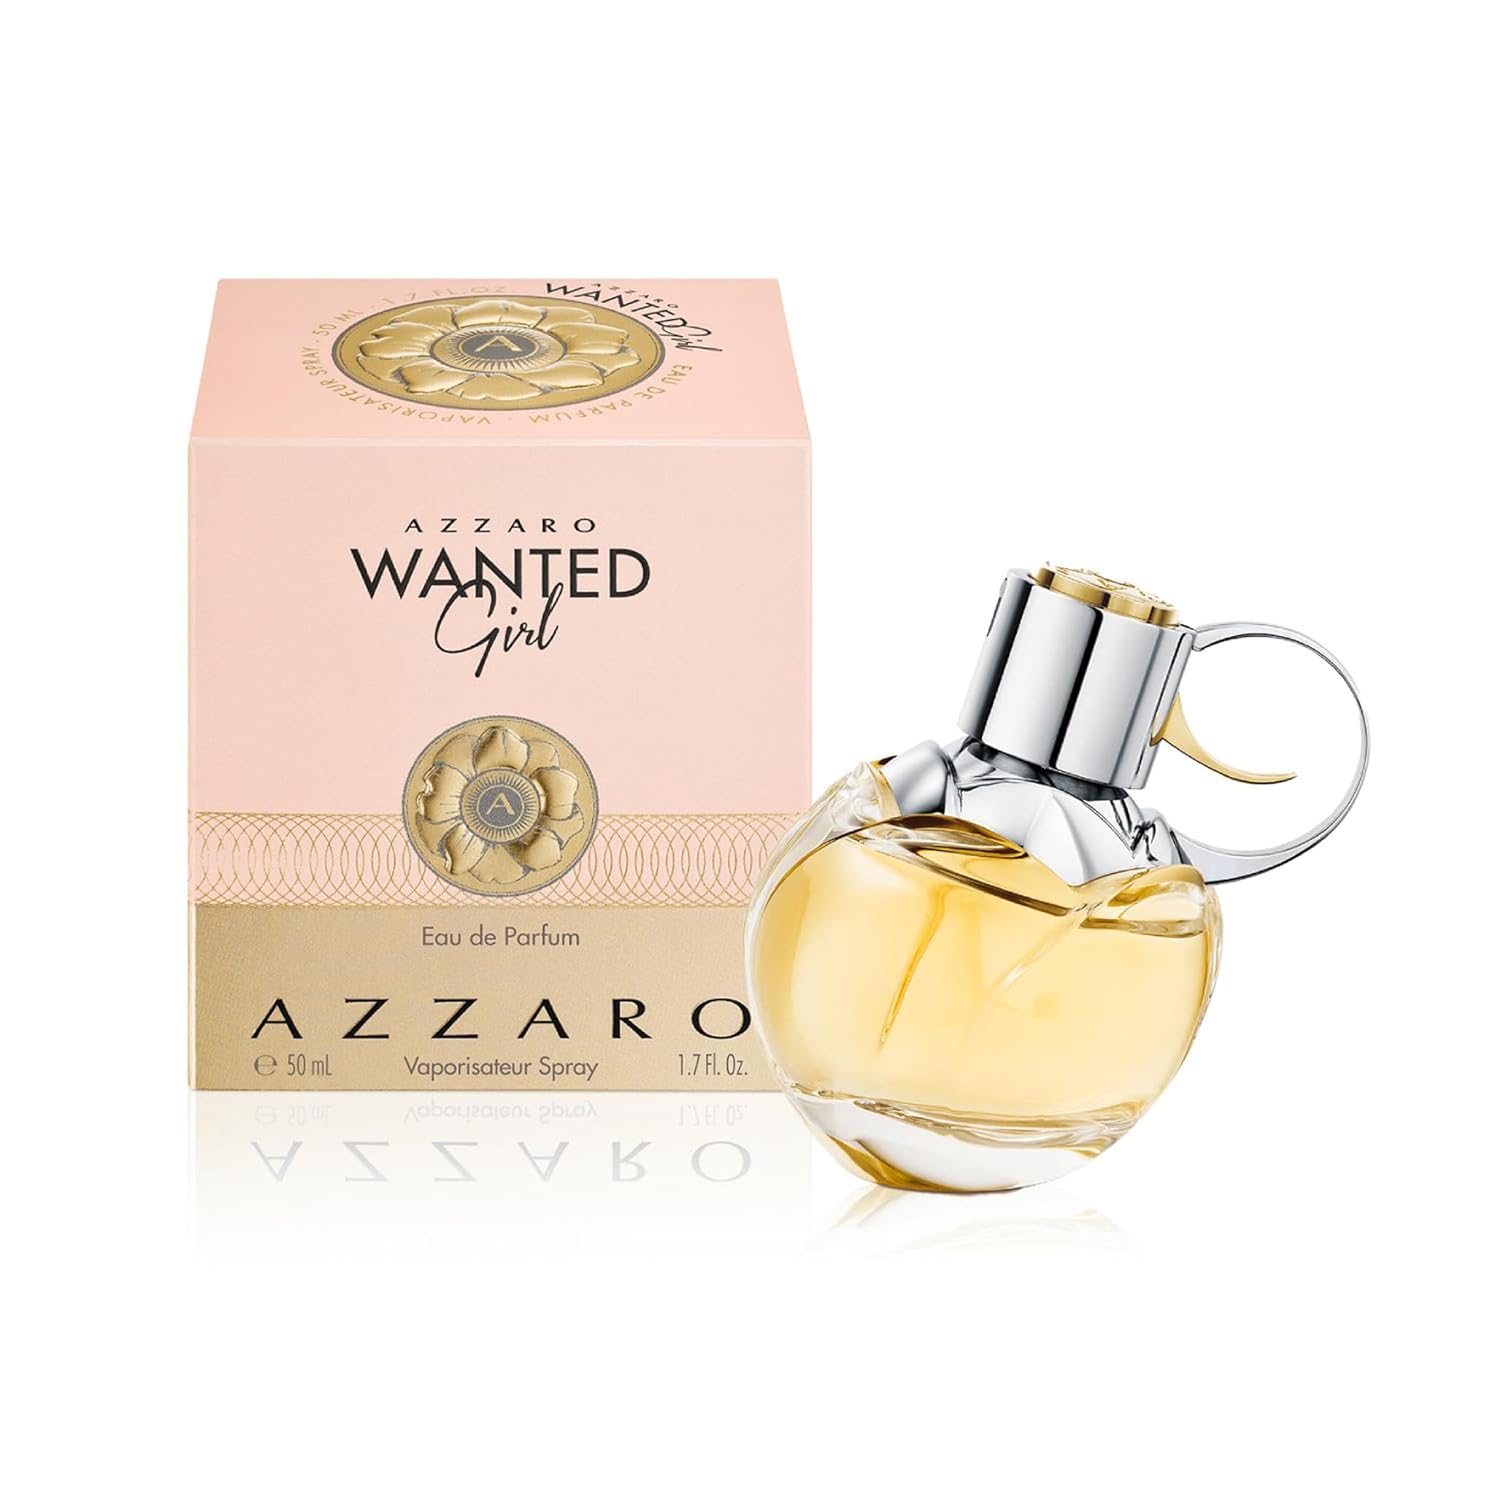 Azzaro Wanted Girl Eau de Parfum Spray 50 ml for Women